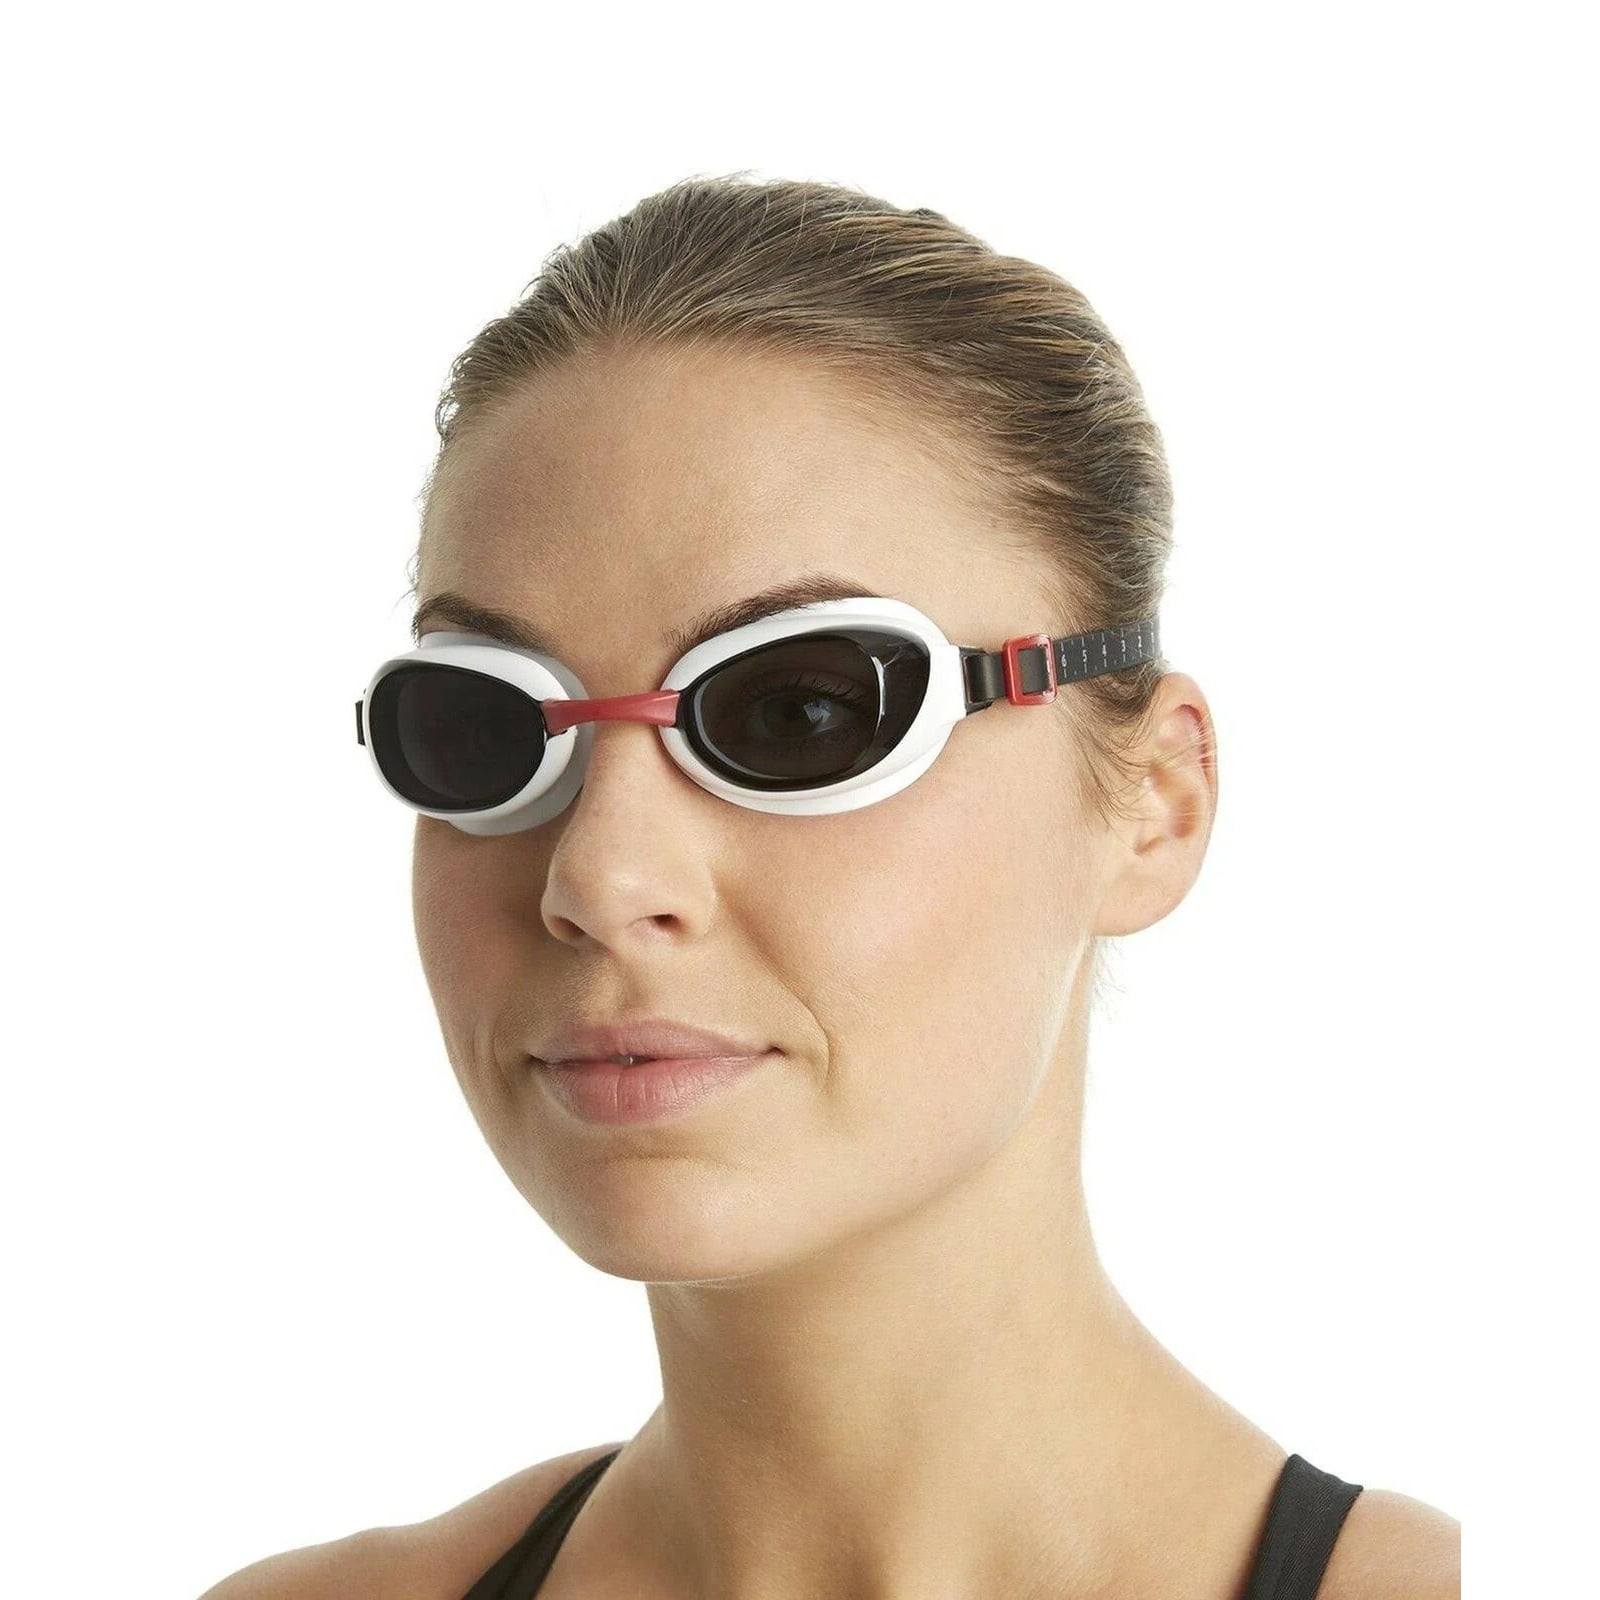 Adults Speedo Aquapure Swimming Goggles 